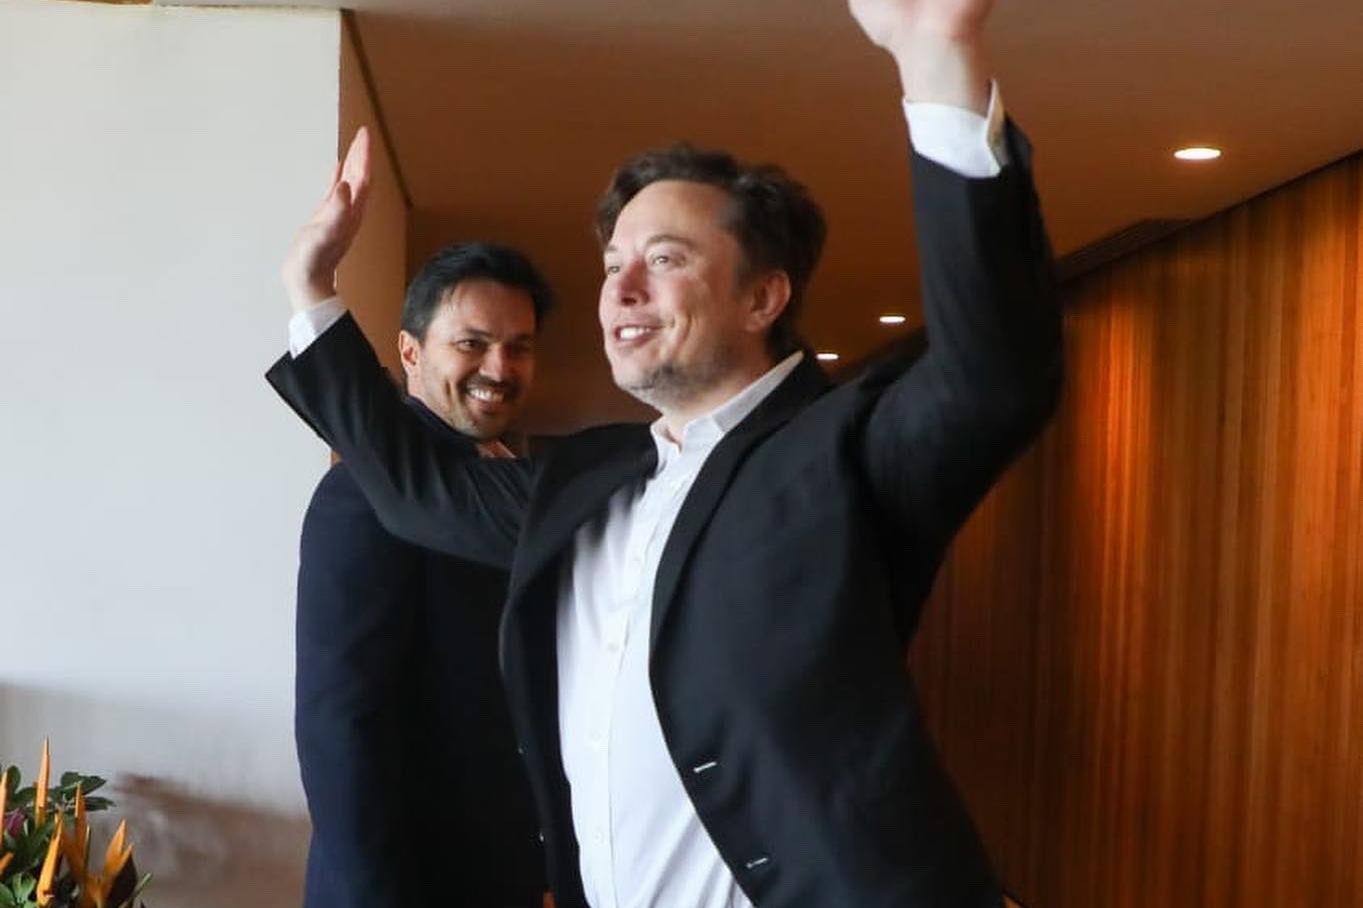 Jair Bolsonaro se reúne con Elon Musk en Brasil: quieren llevar internet a la selva amazónica